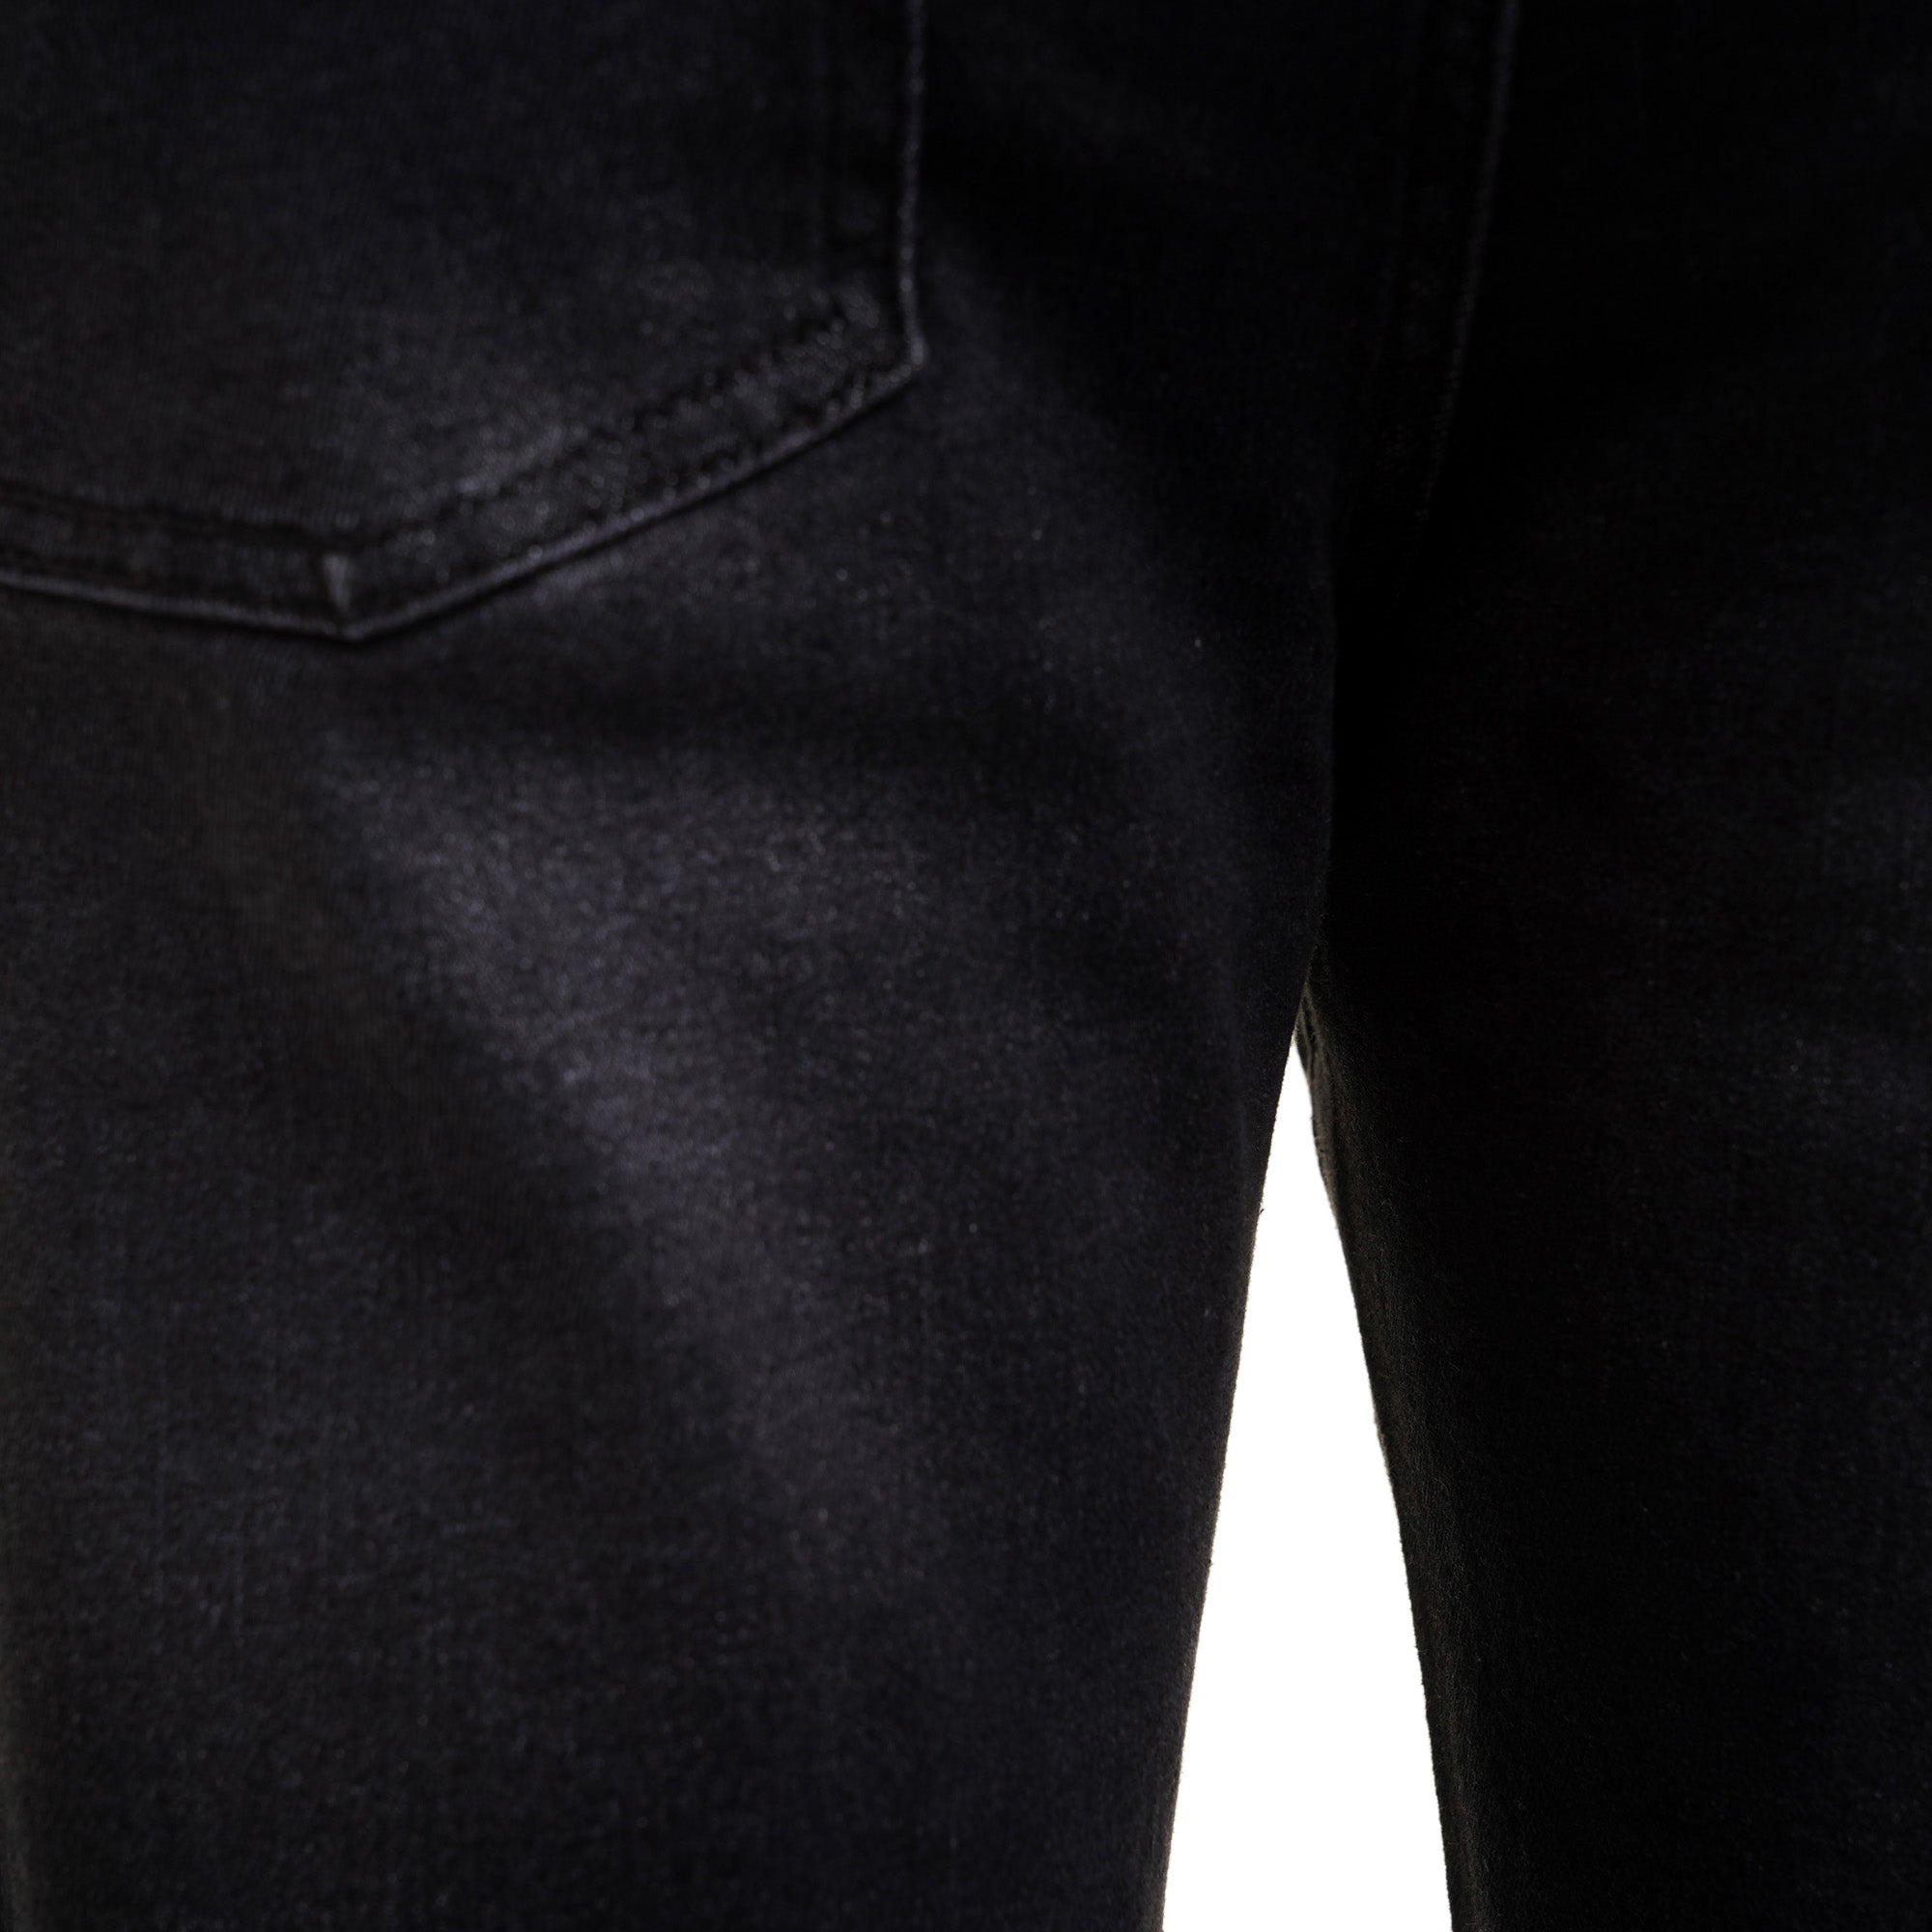 Original Johnny Stretch Jeans Standard Fit - Black